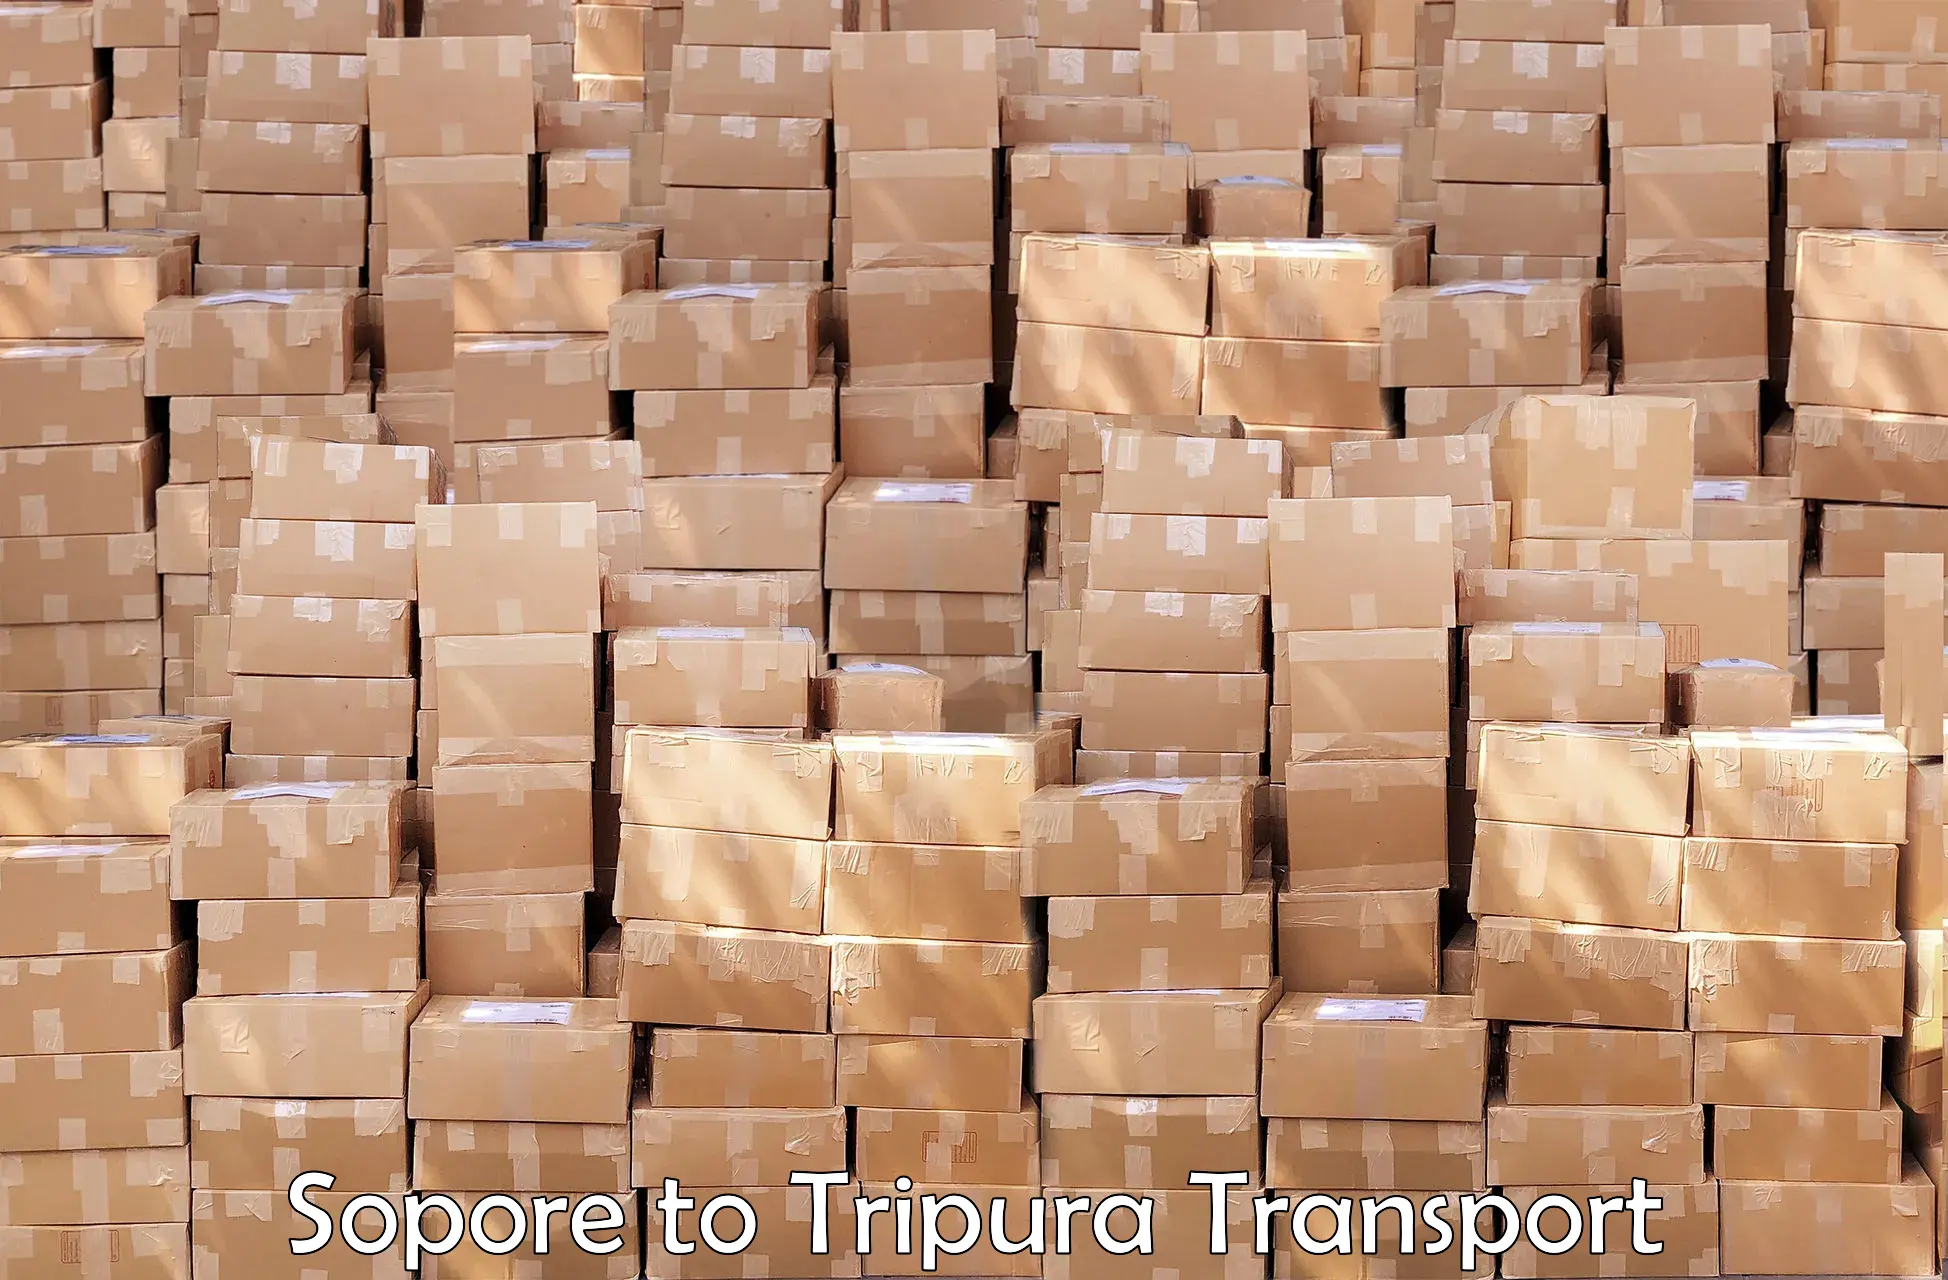 Online transport service Sopore to IIIT Agartala